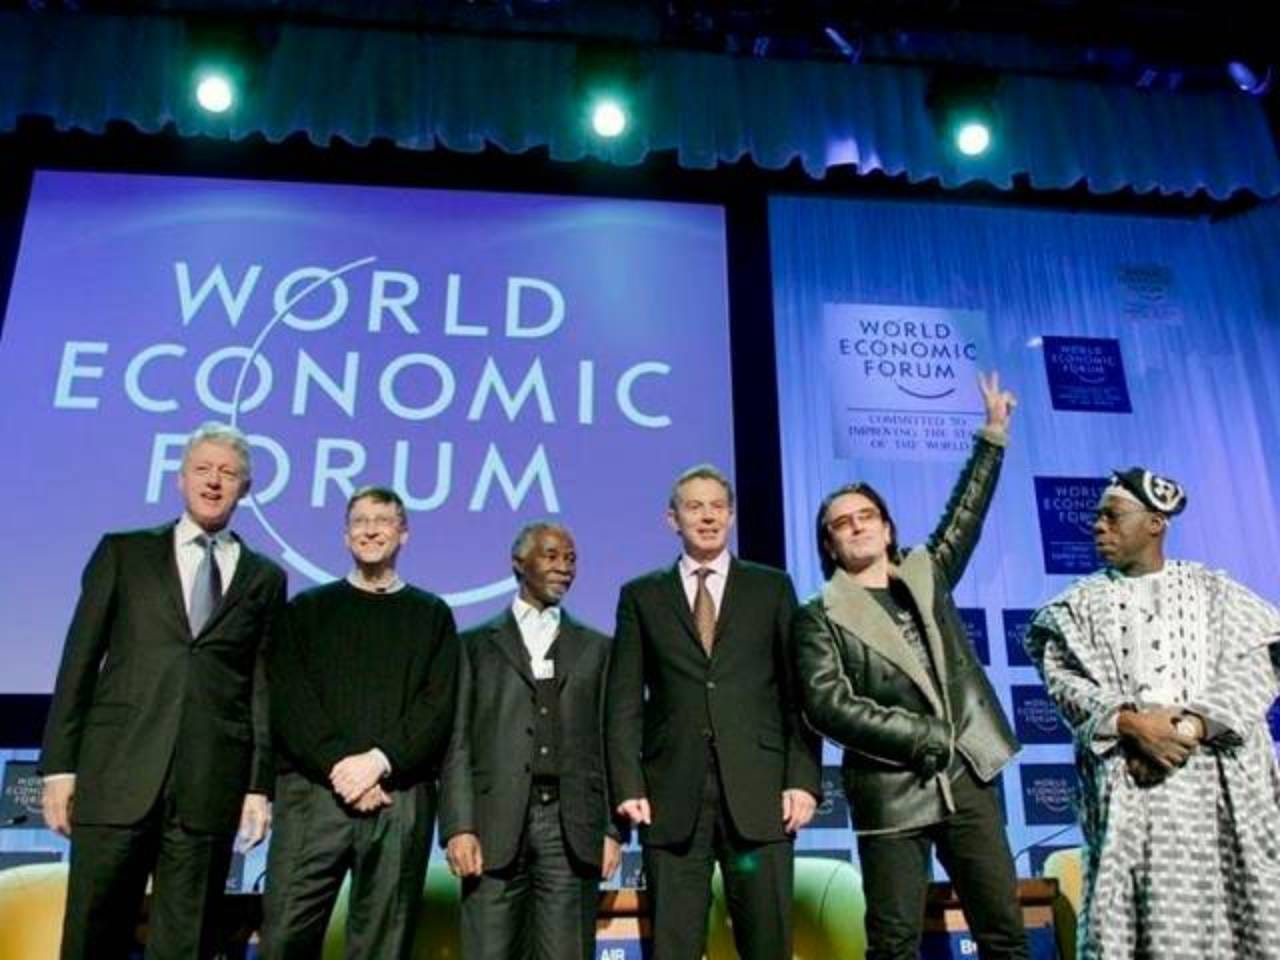 World Economic Forum 2010 | SENATUS